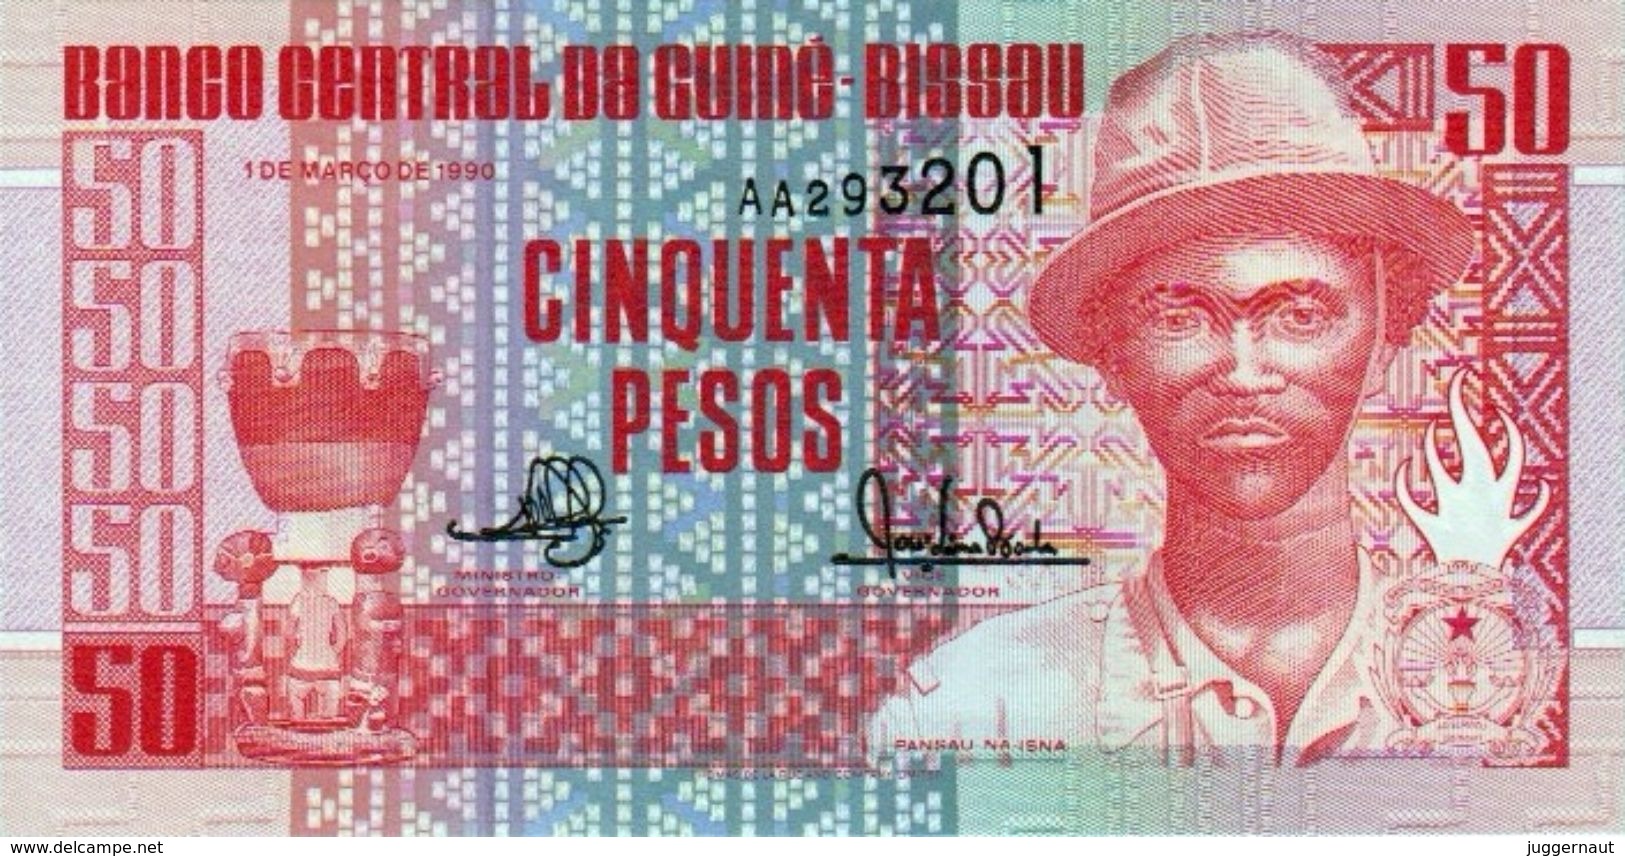 GUINEA-BISSAU 50 PESOS BANKNOTE 1990 AD PICK NO.10 UNCIRCULATED UNC - Guinee-Bissau